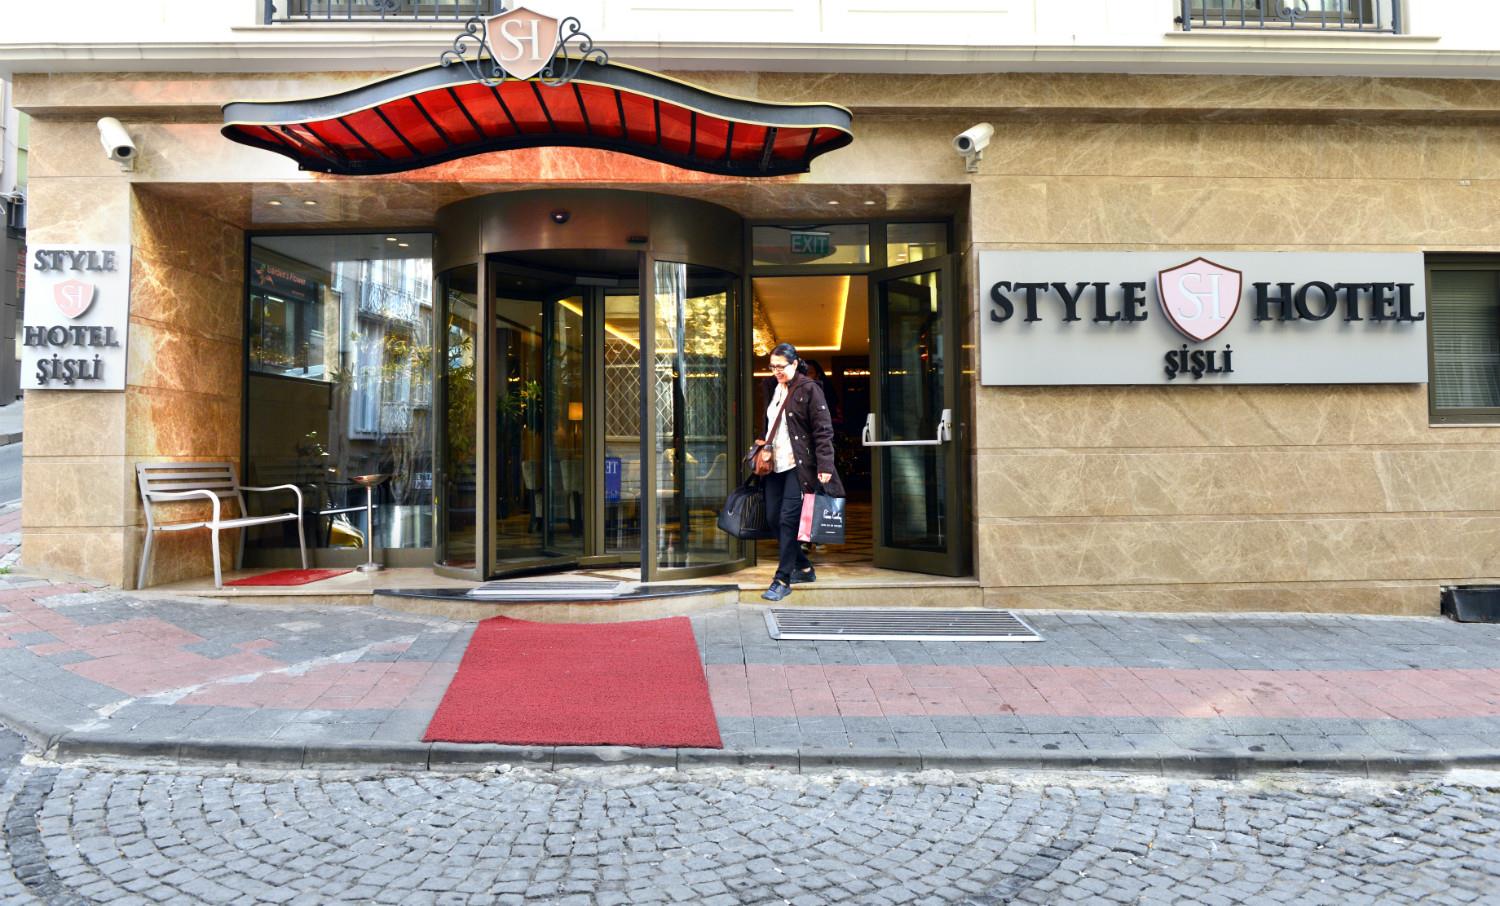 Style Hotel Sisli 4*